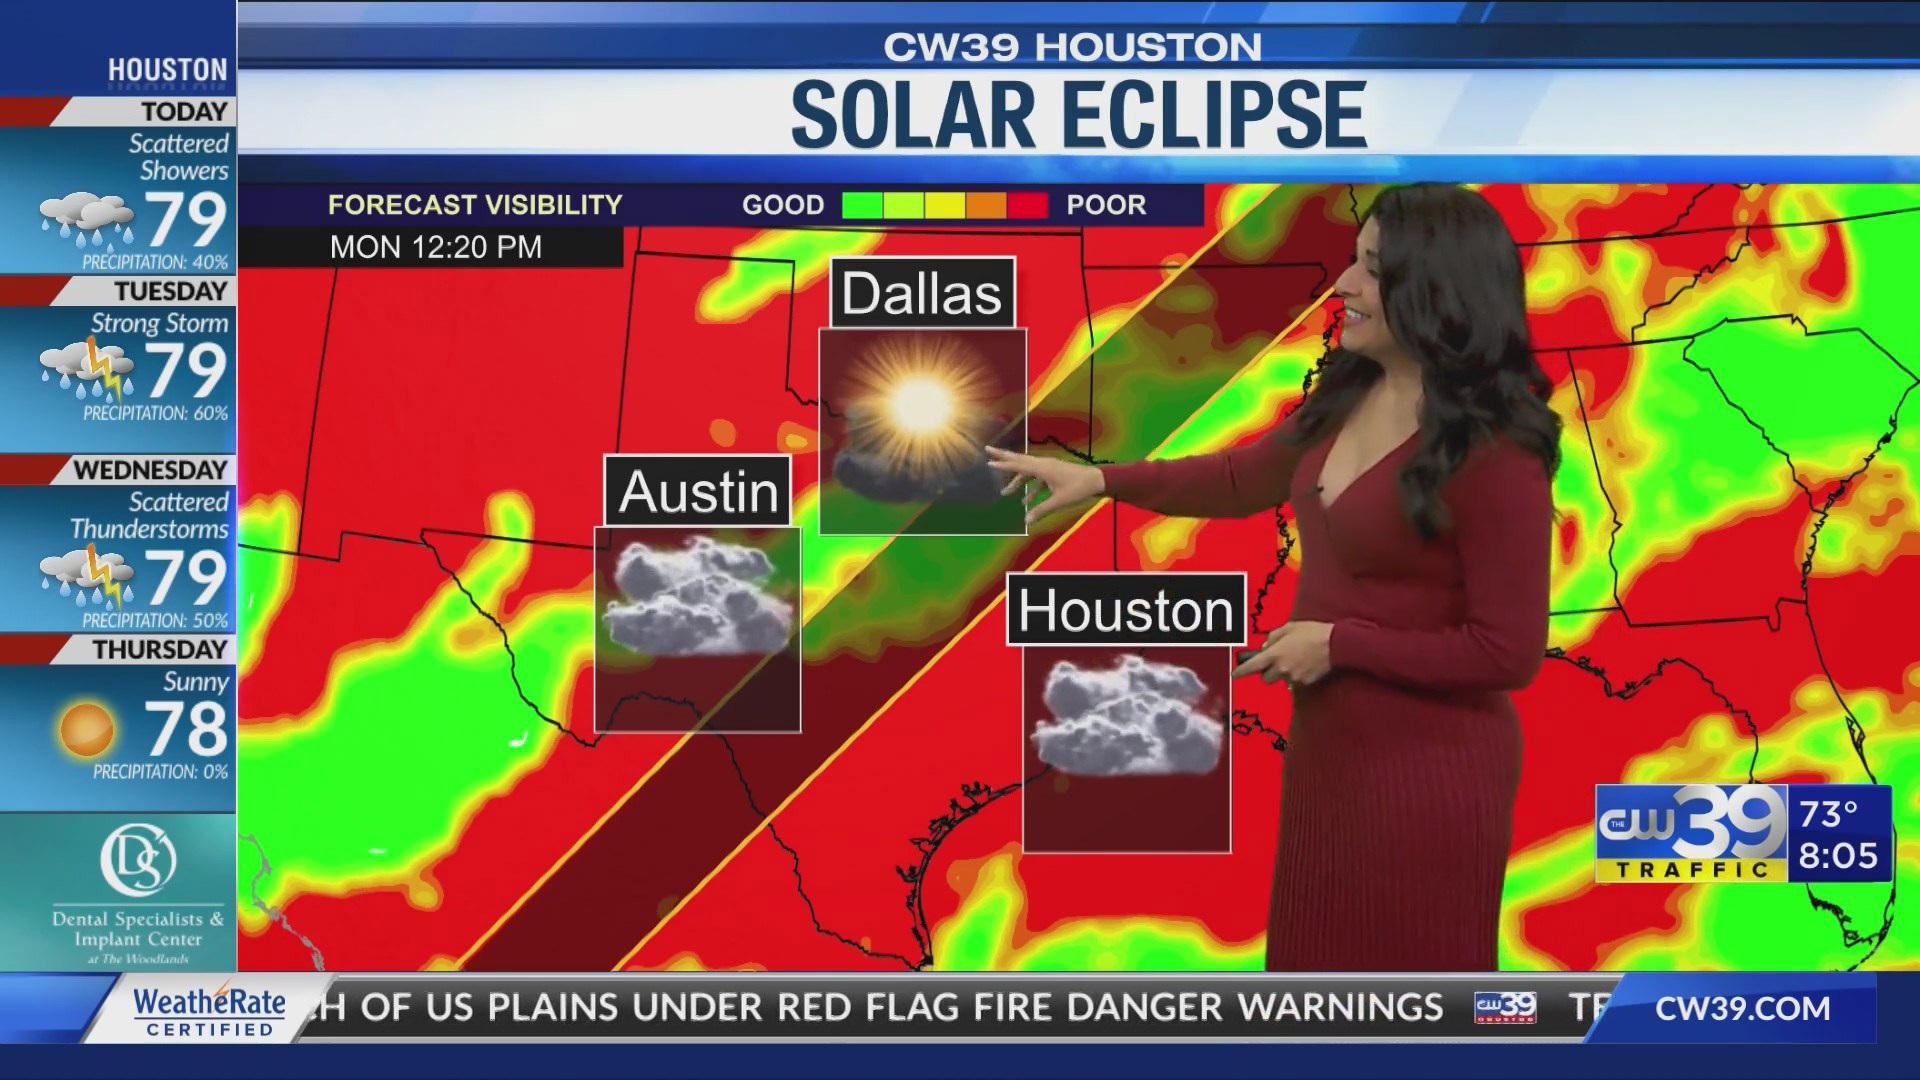 Solar Eclipse forecast for Texas CW39 HOUSTON